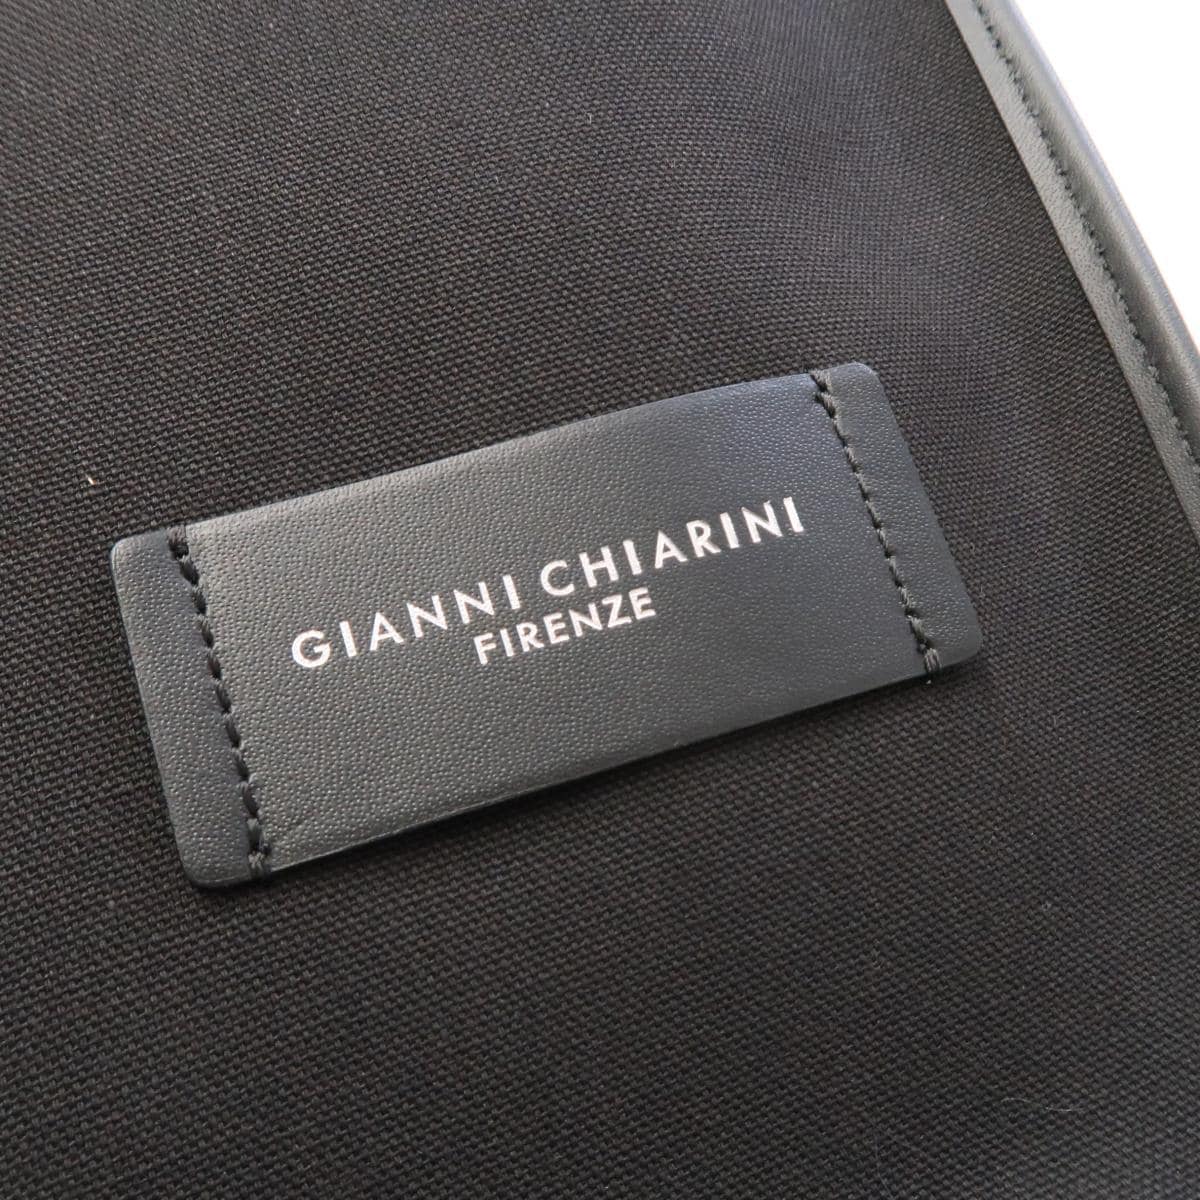 [新品] Gianni Chiarini 包 6850